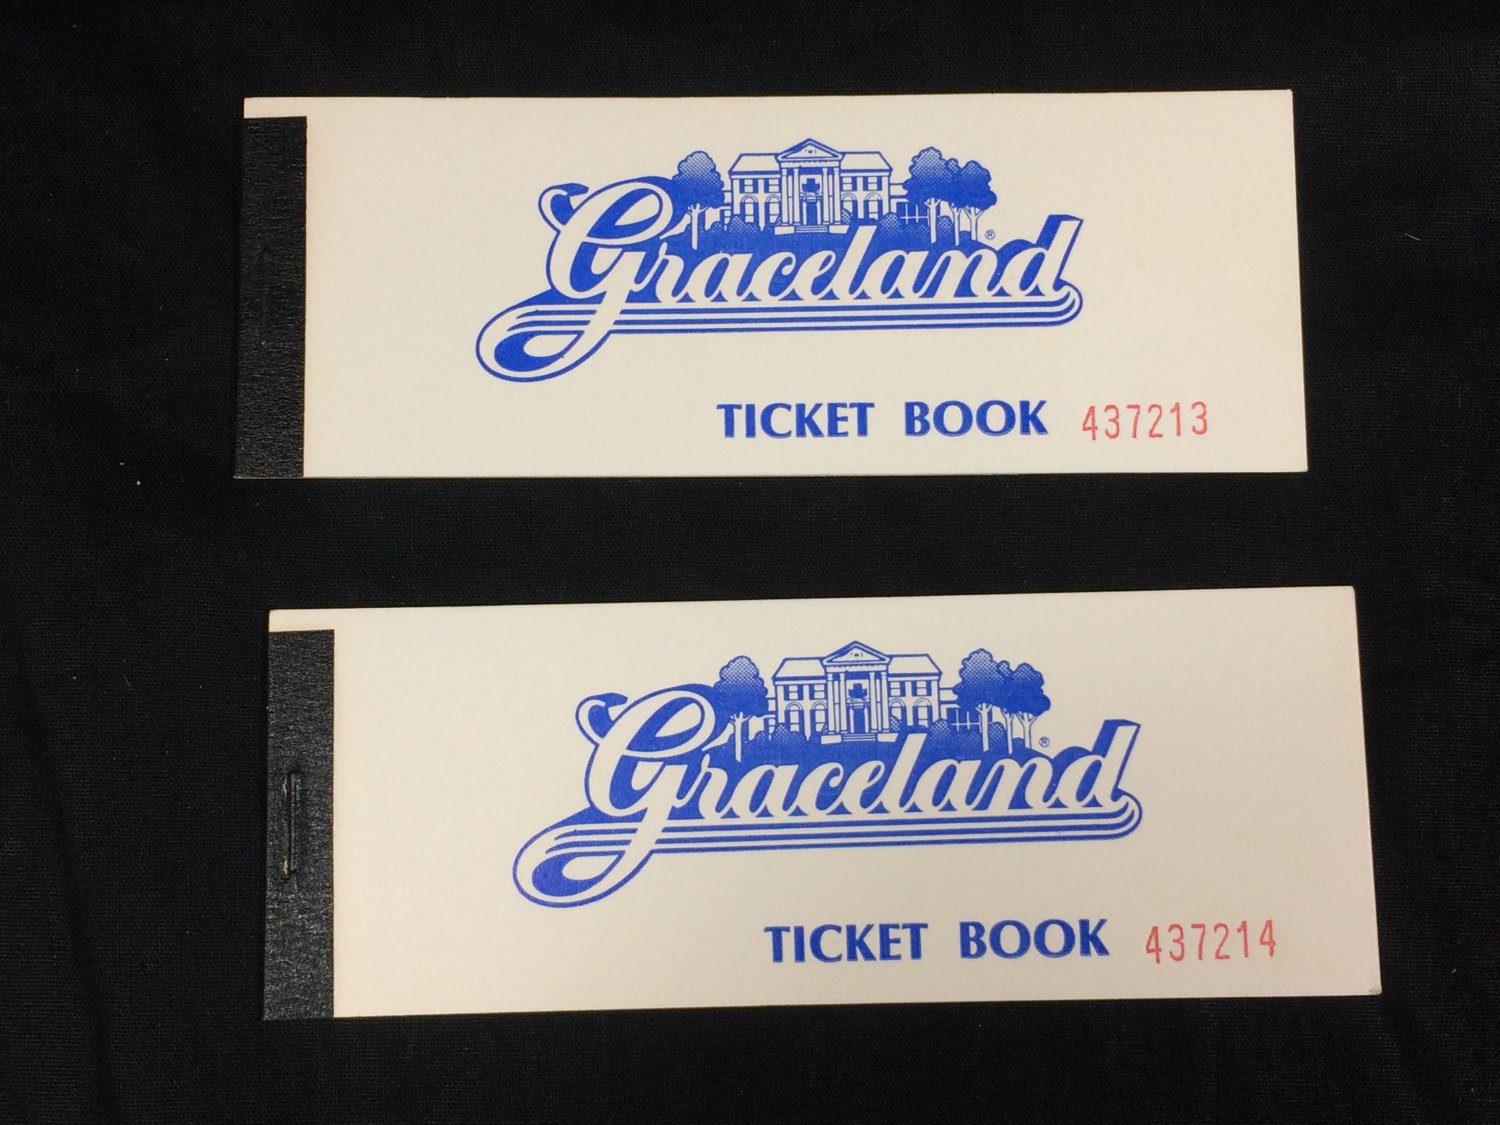 tickets for graceland tour